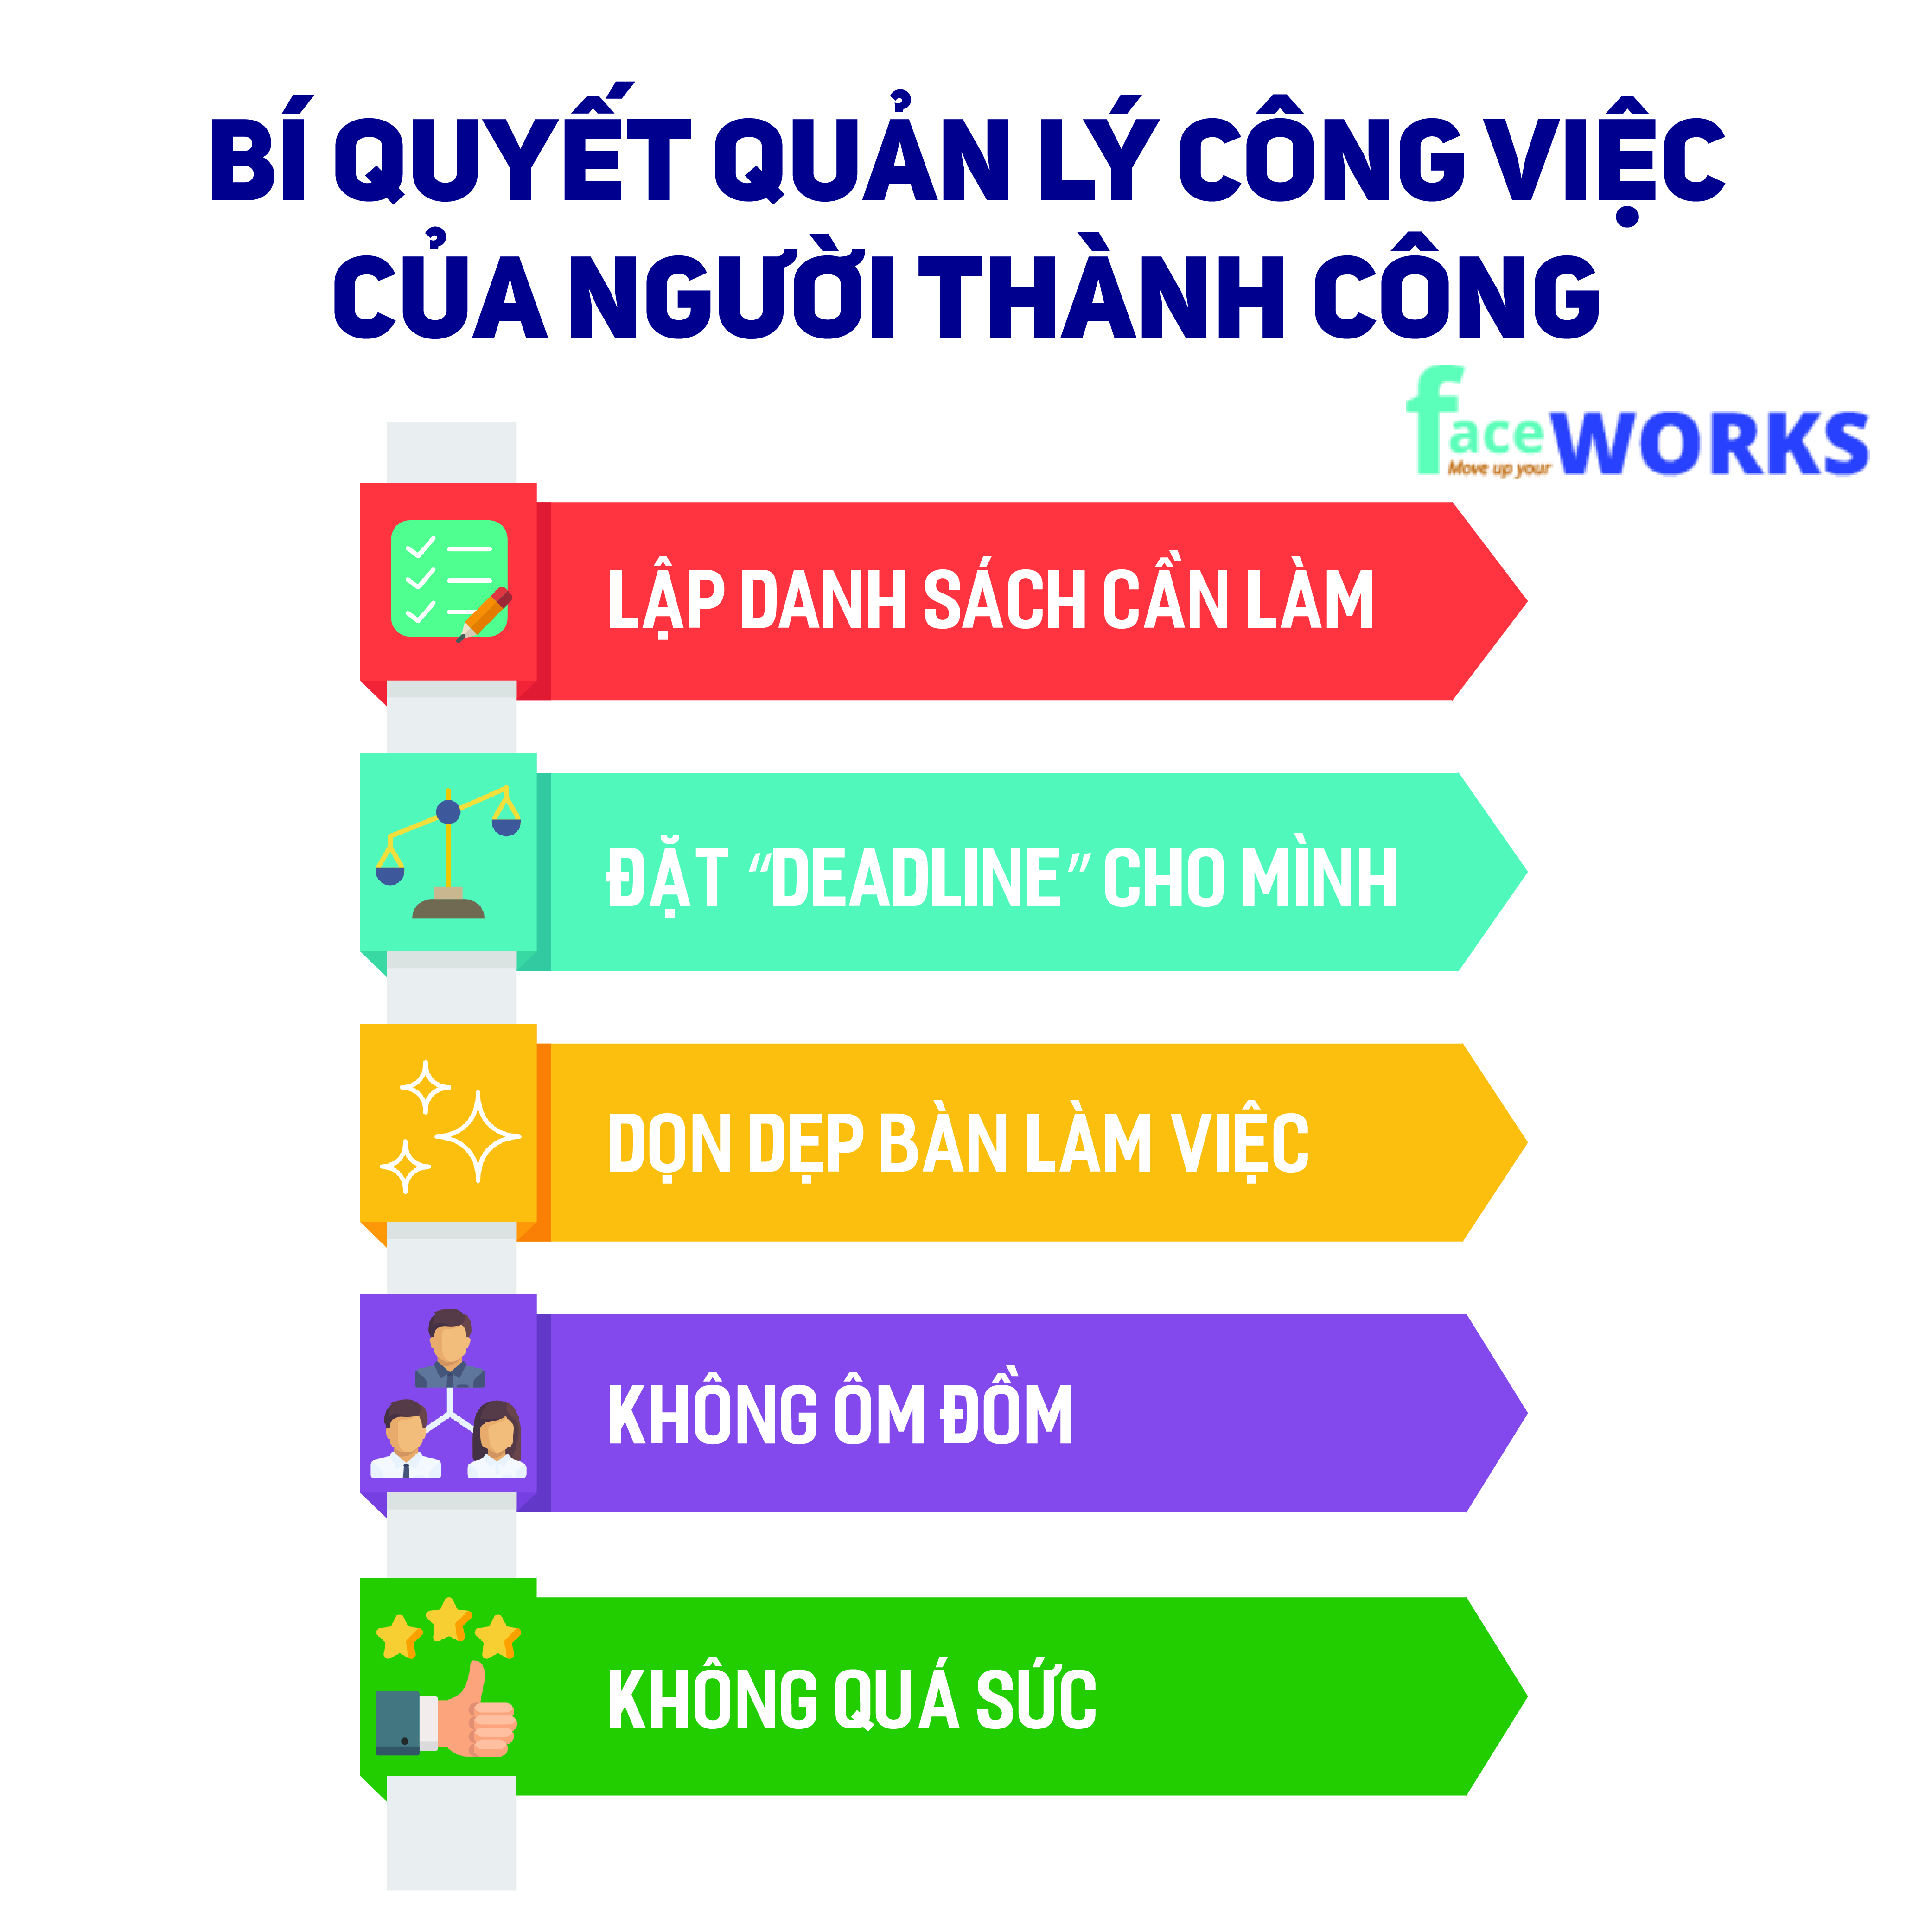 BI QUYET QUAN LY CONG VIEC THANH CONG-01